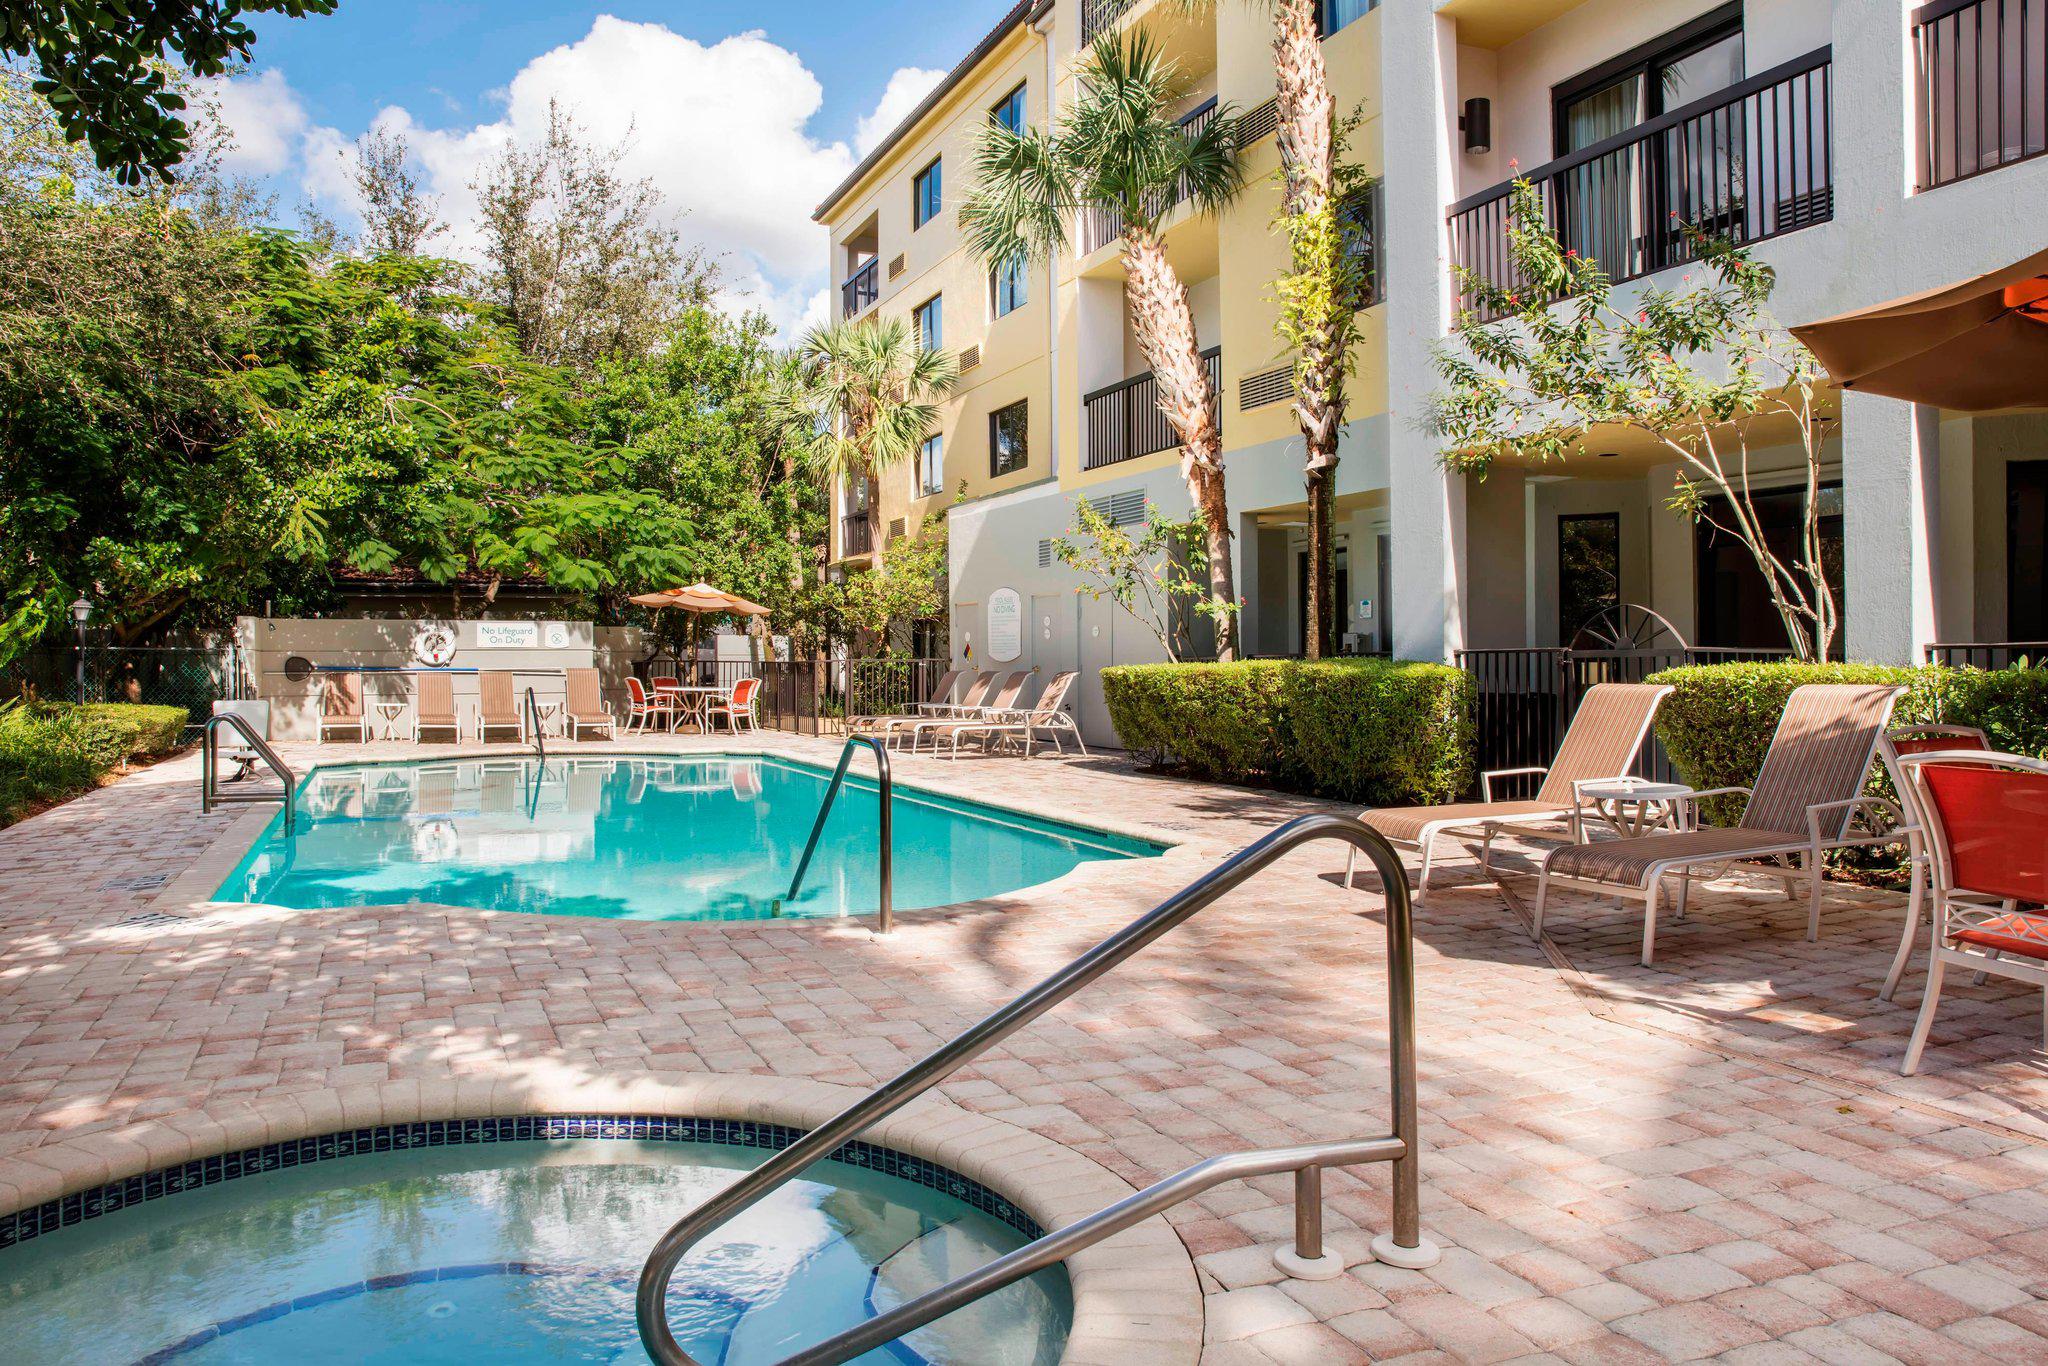 Courtyard by Marriott Fort Lauderdale Coral Springs, Coral Springs